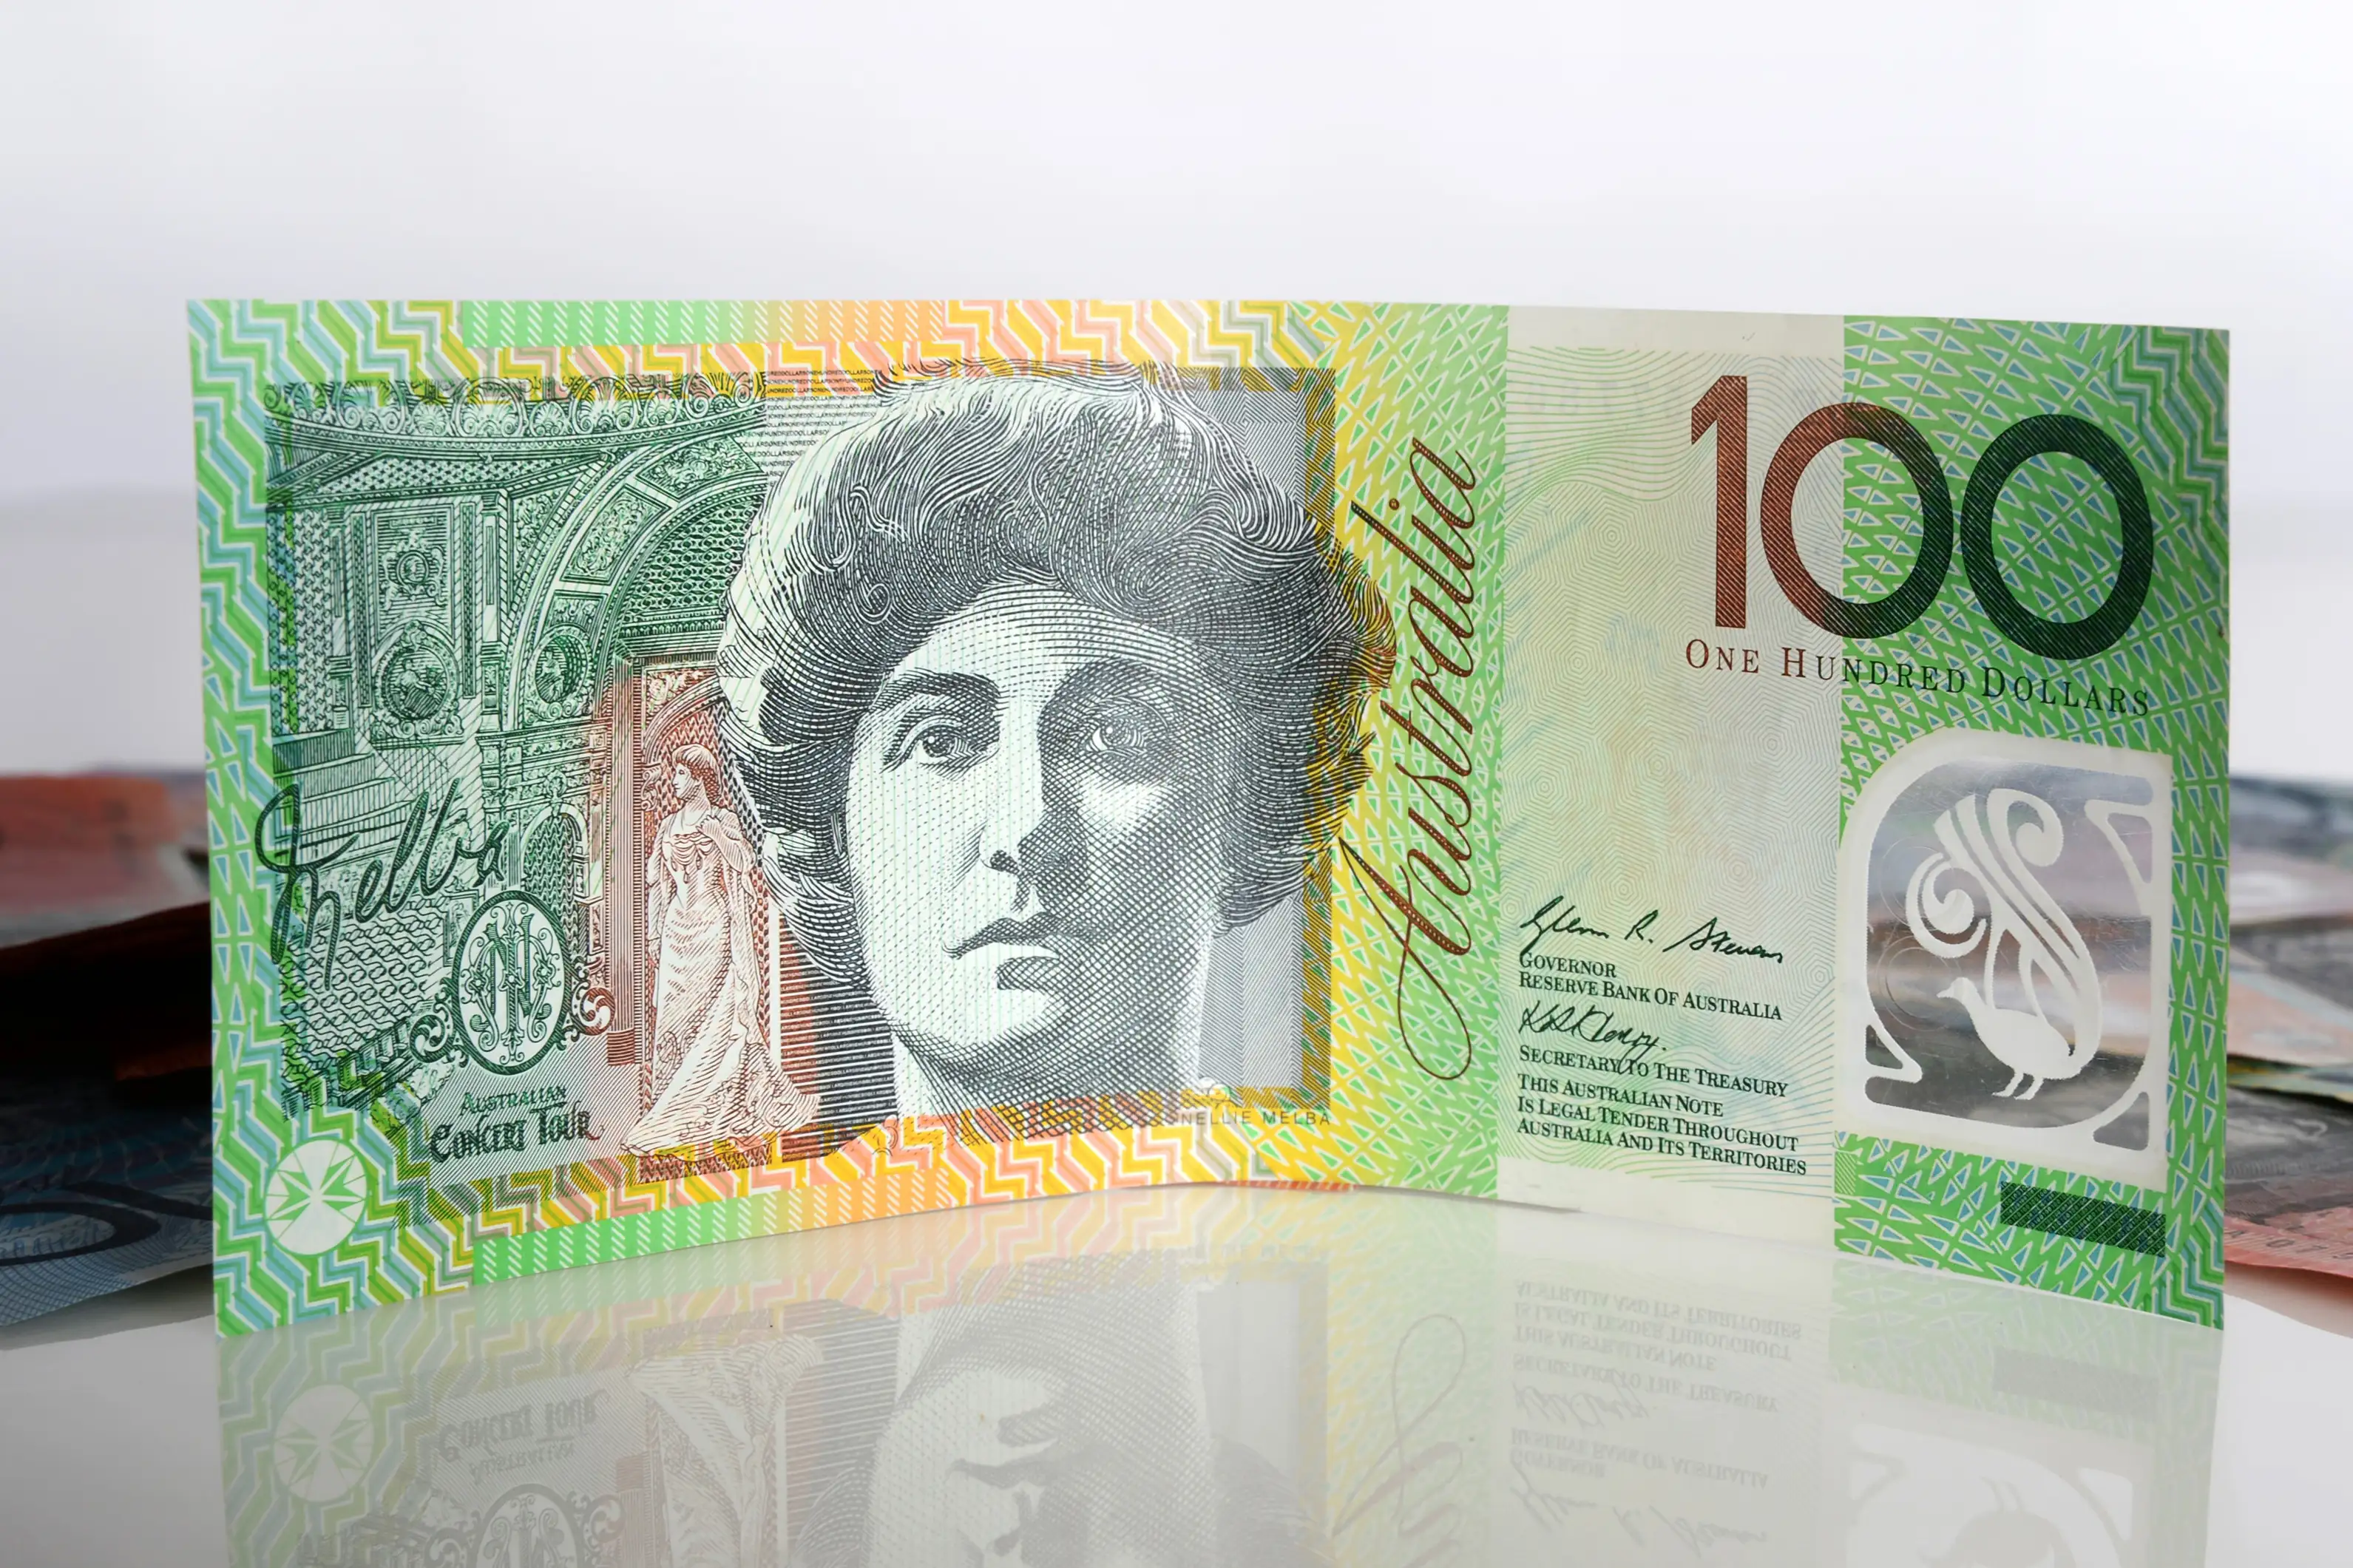 An Australian one-hundred dollar banknote